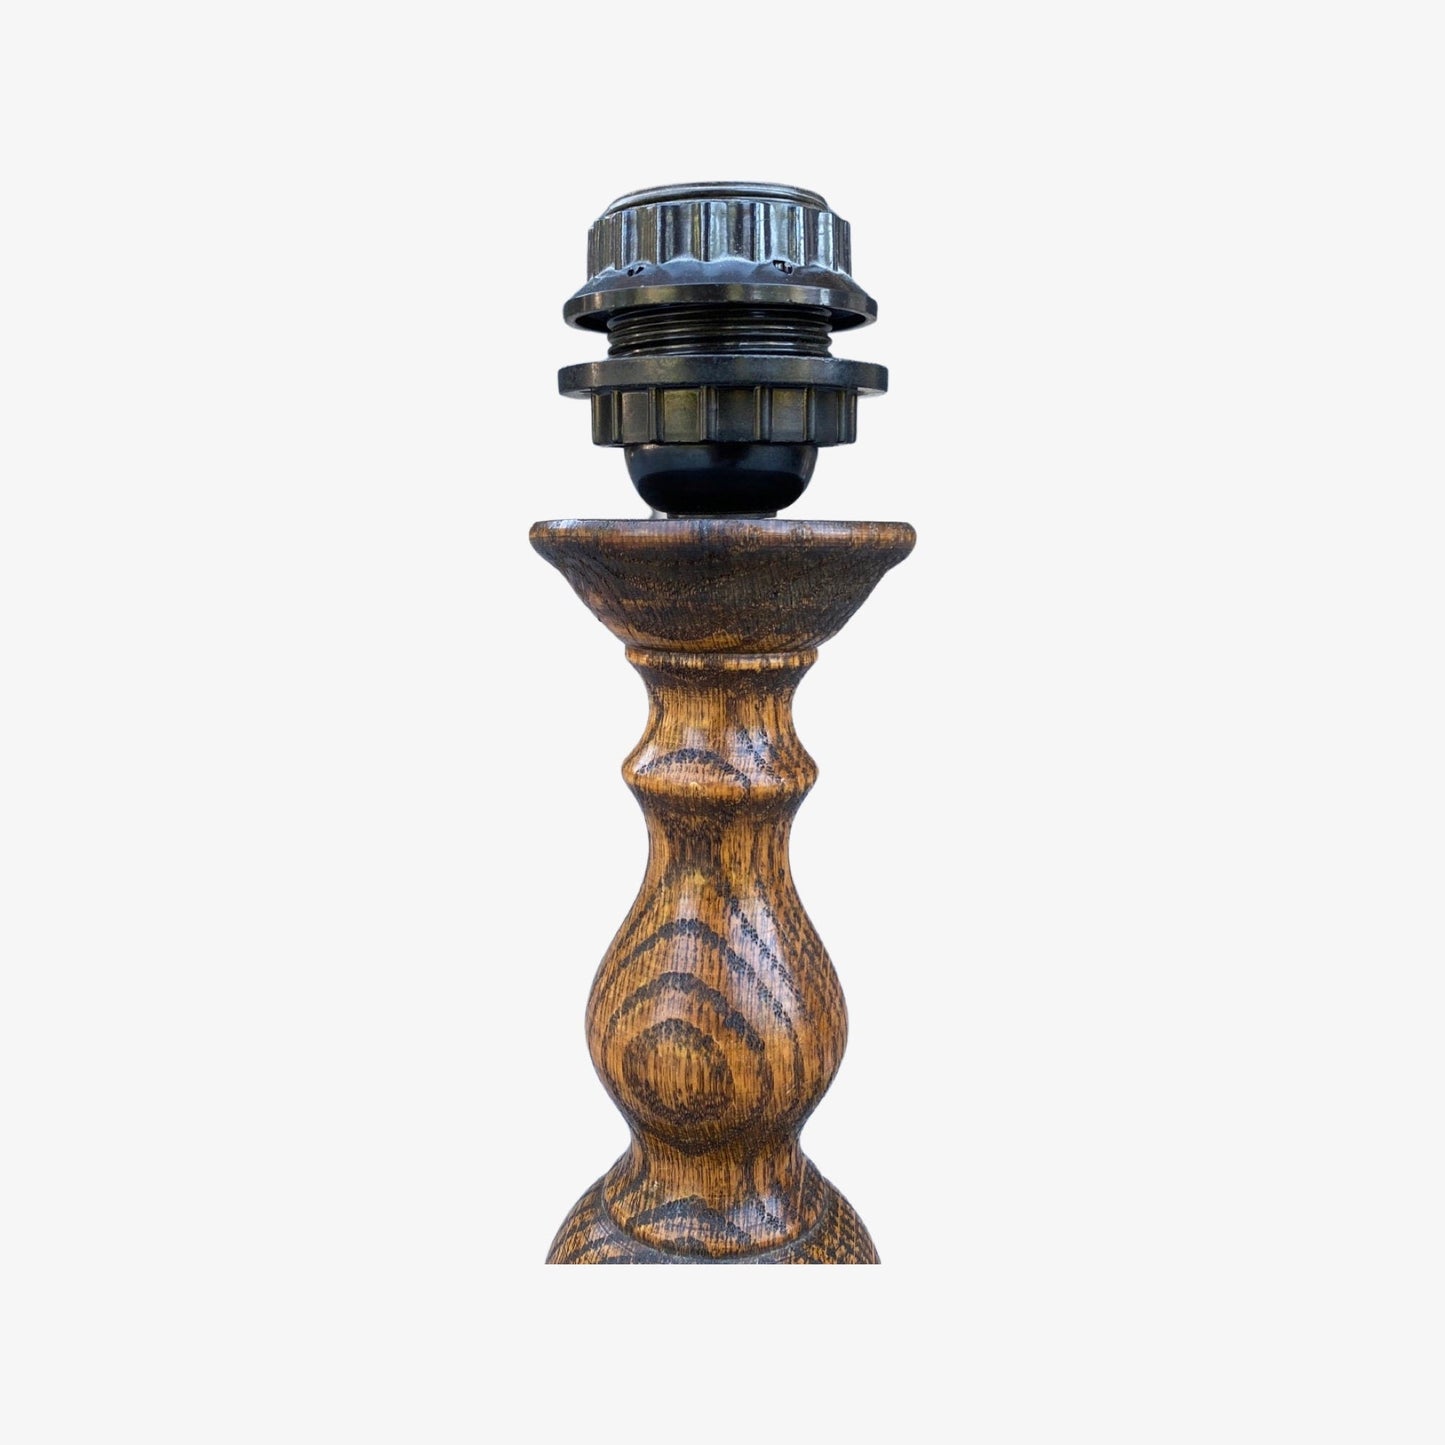 1950s Retro Dark Wood Table Lamp - FancyVintage.nl -